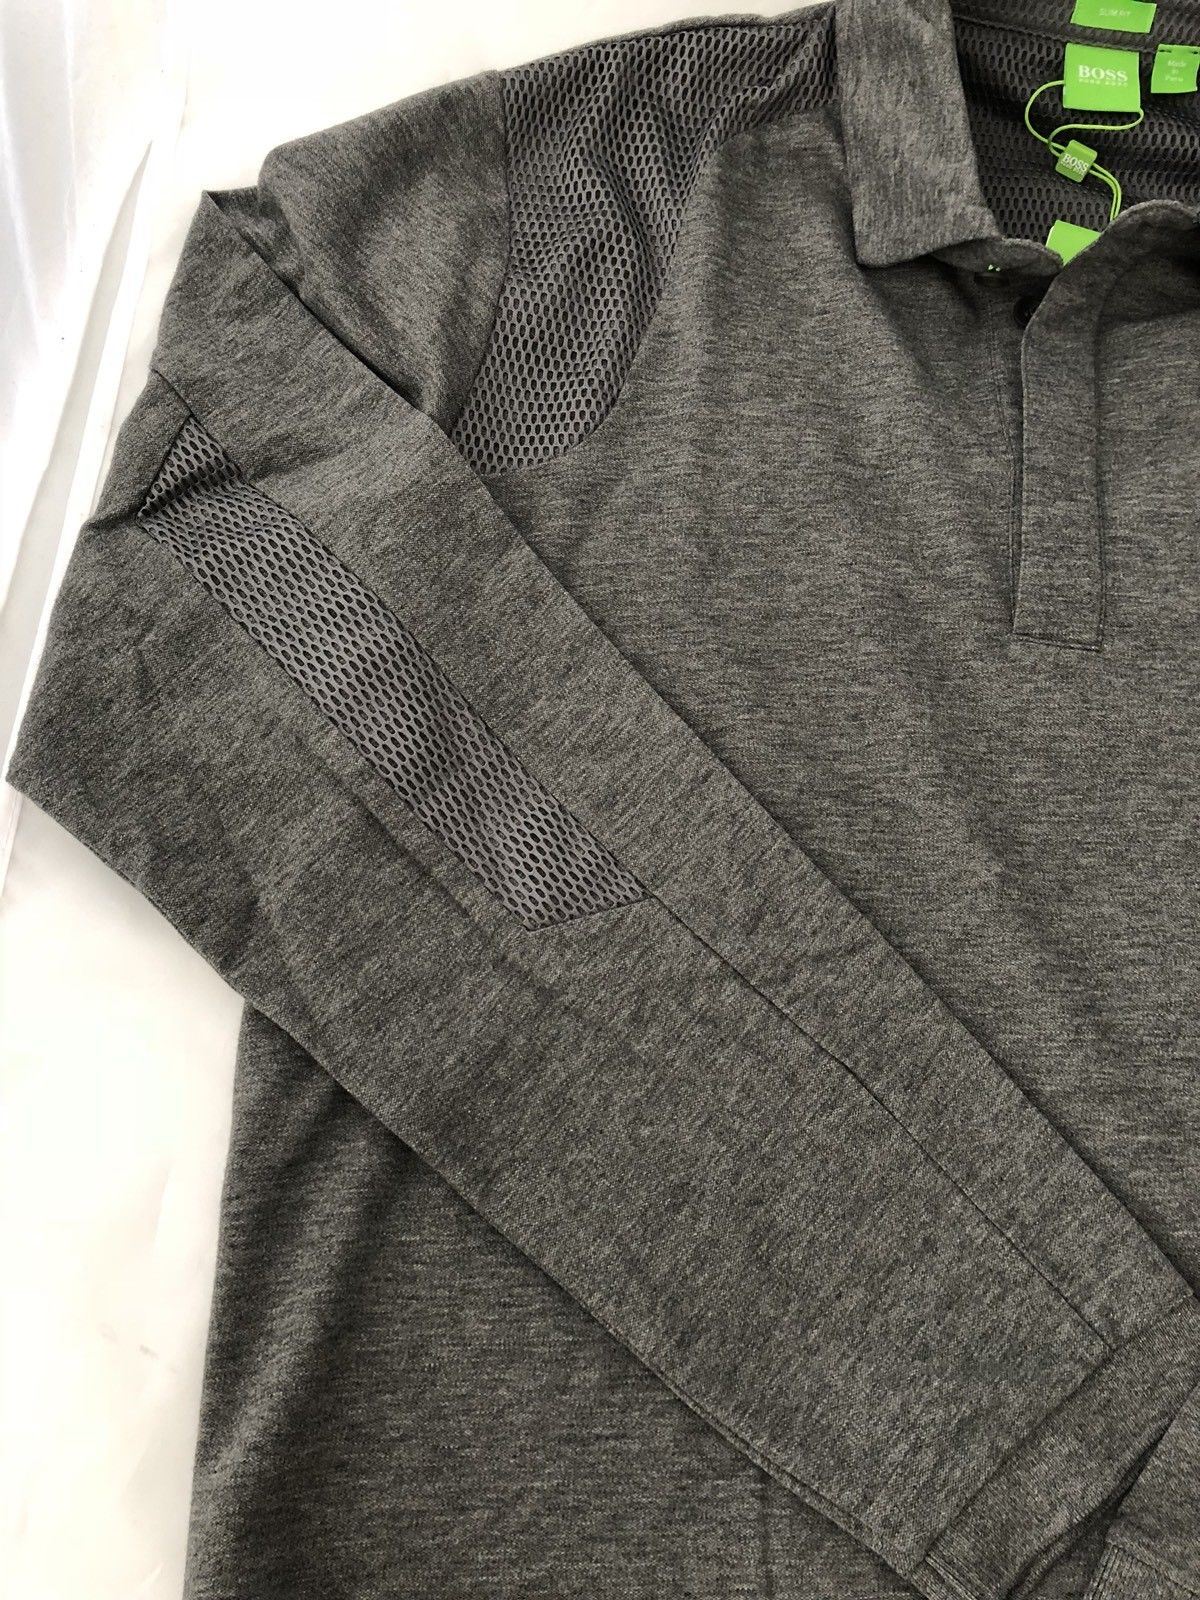 NWT BOSS Hugo Boss Green 'Pleesy 2' Long Sleeve Polo Slim Fit Shirt Gray S - BAYSUPERSTORE